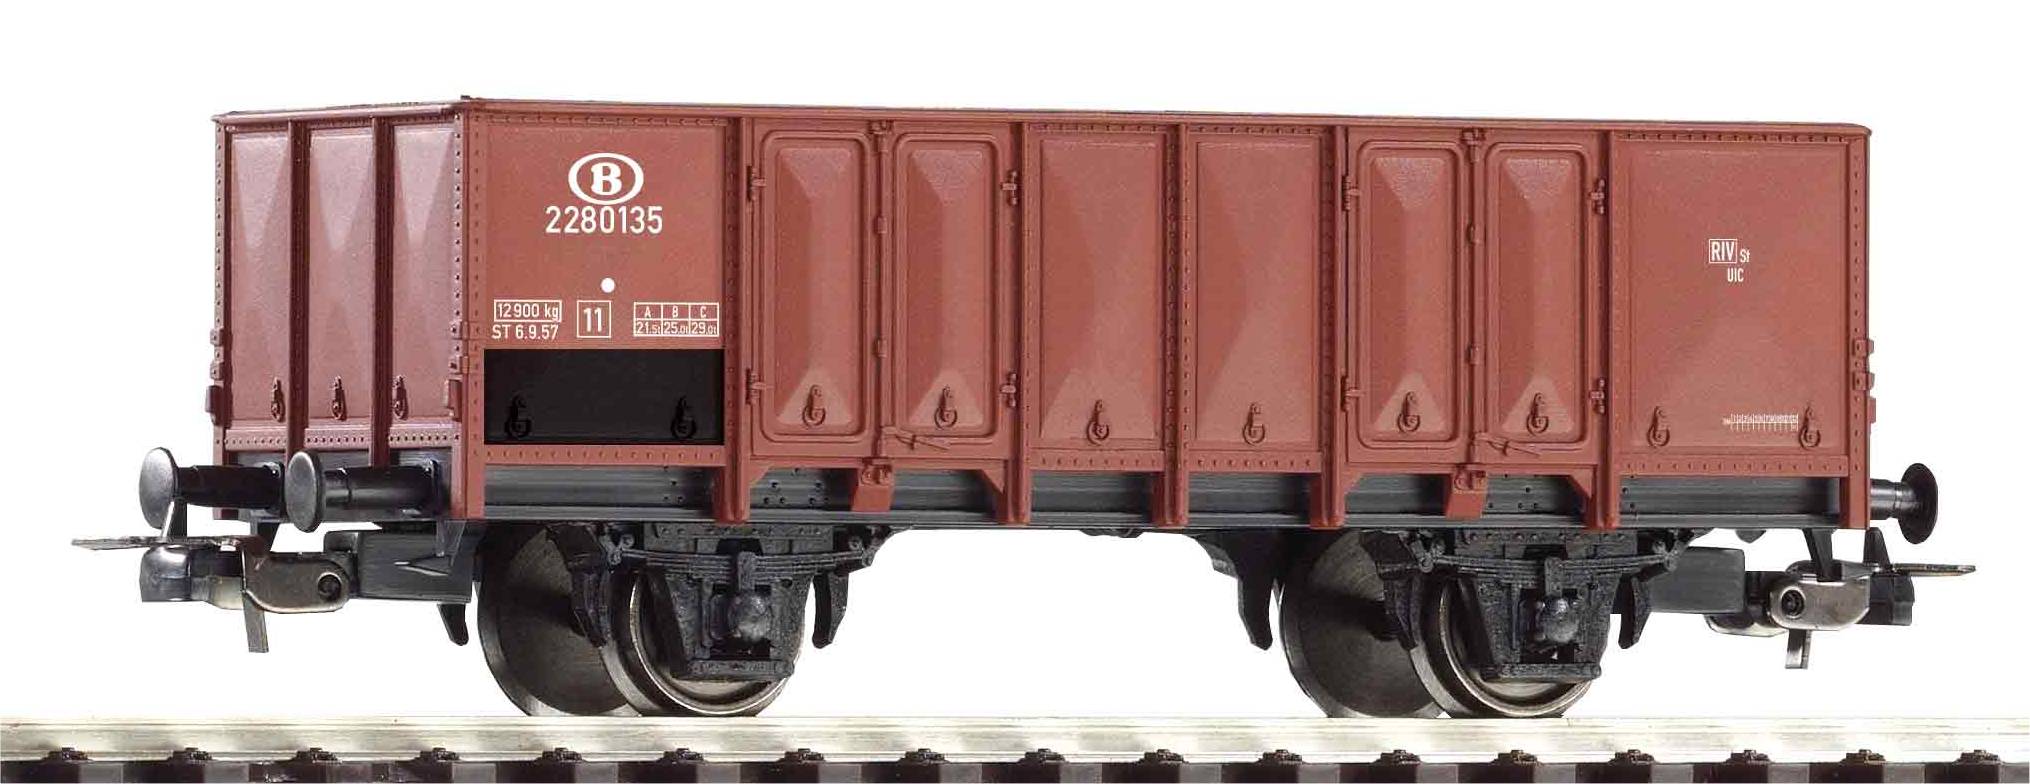 Offener Güterwagen Typ I SNCB - 54305